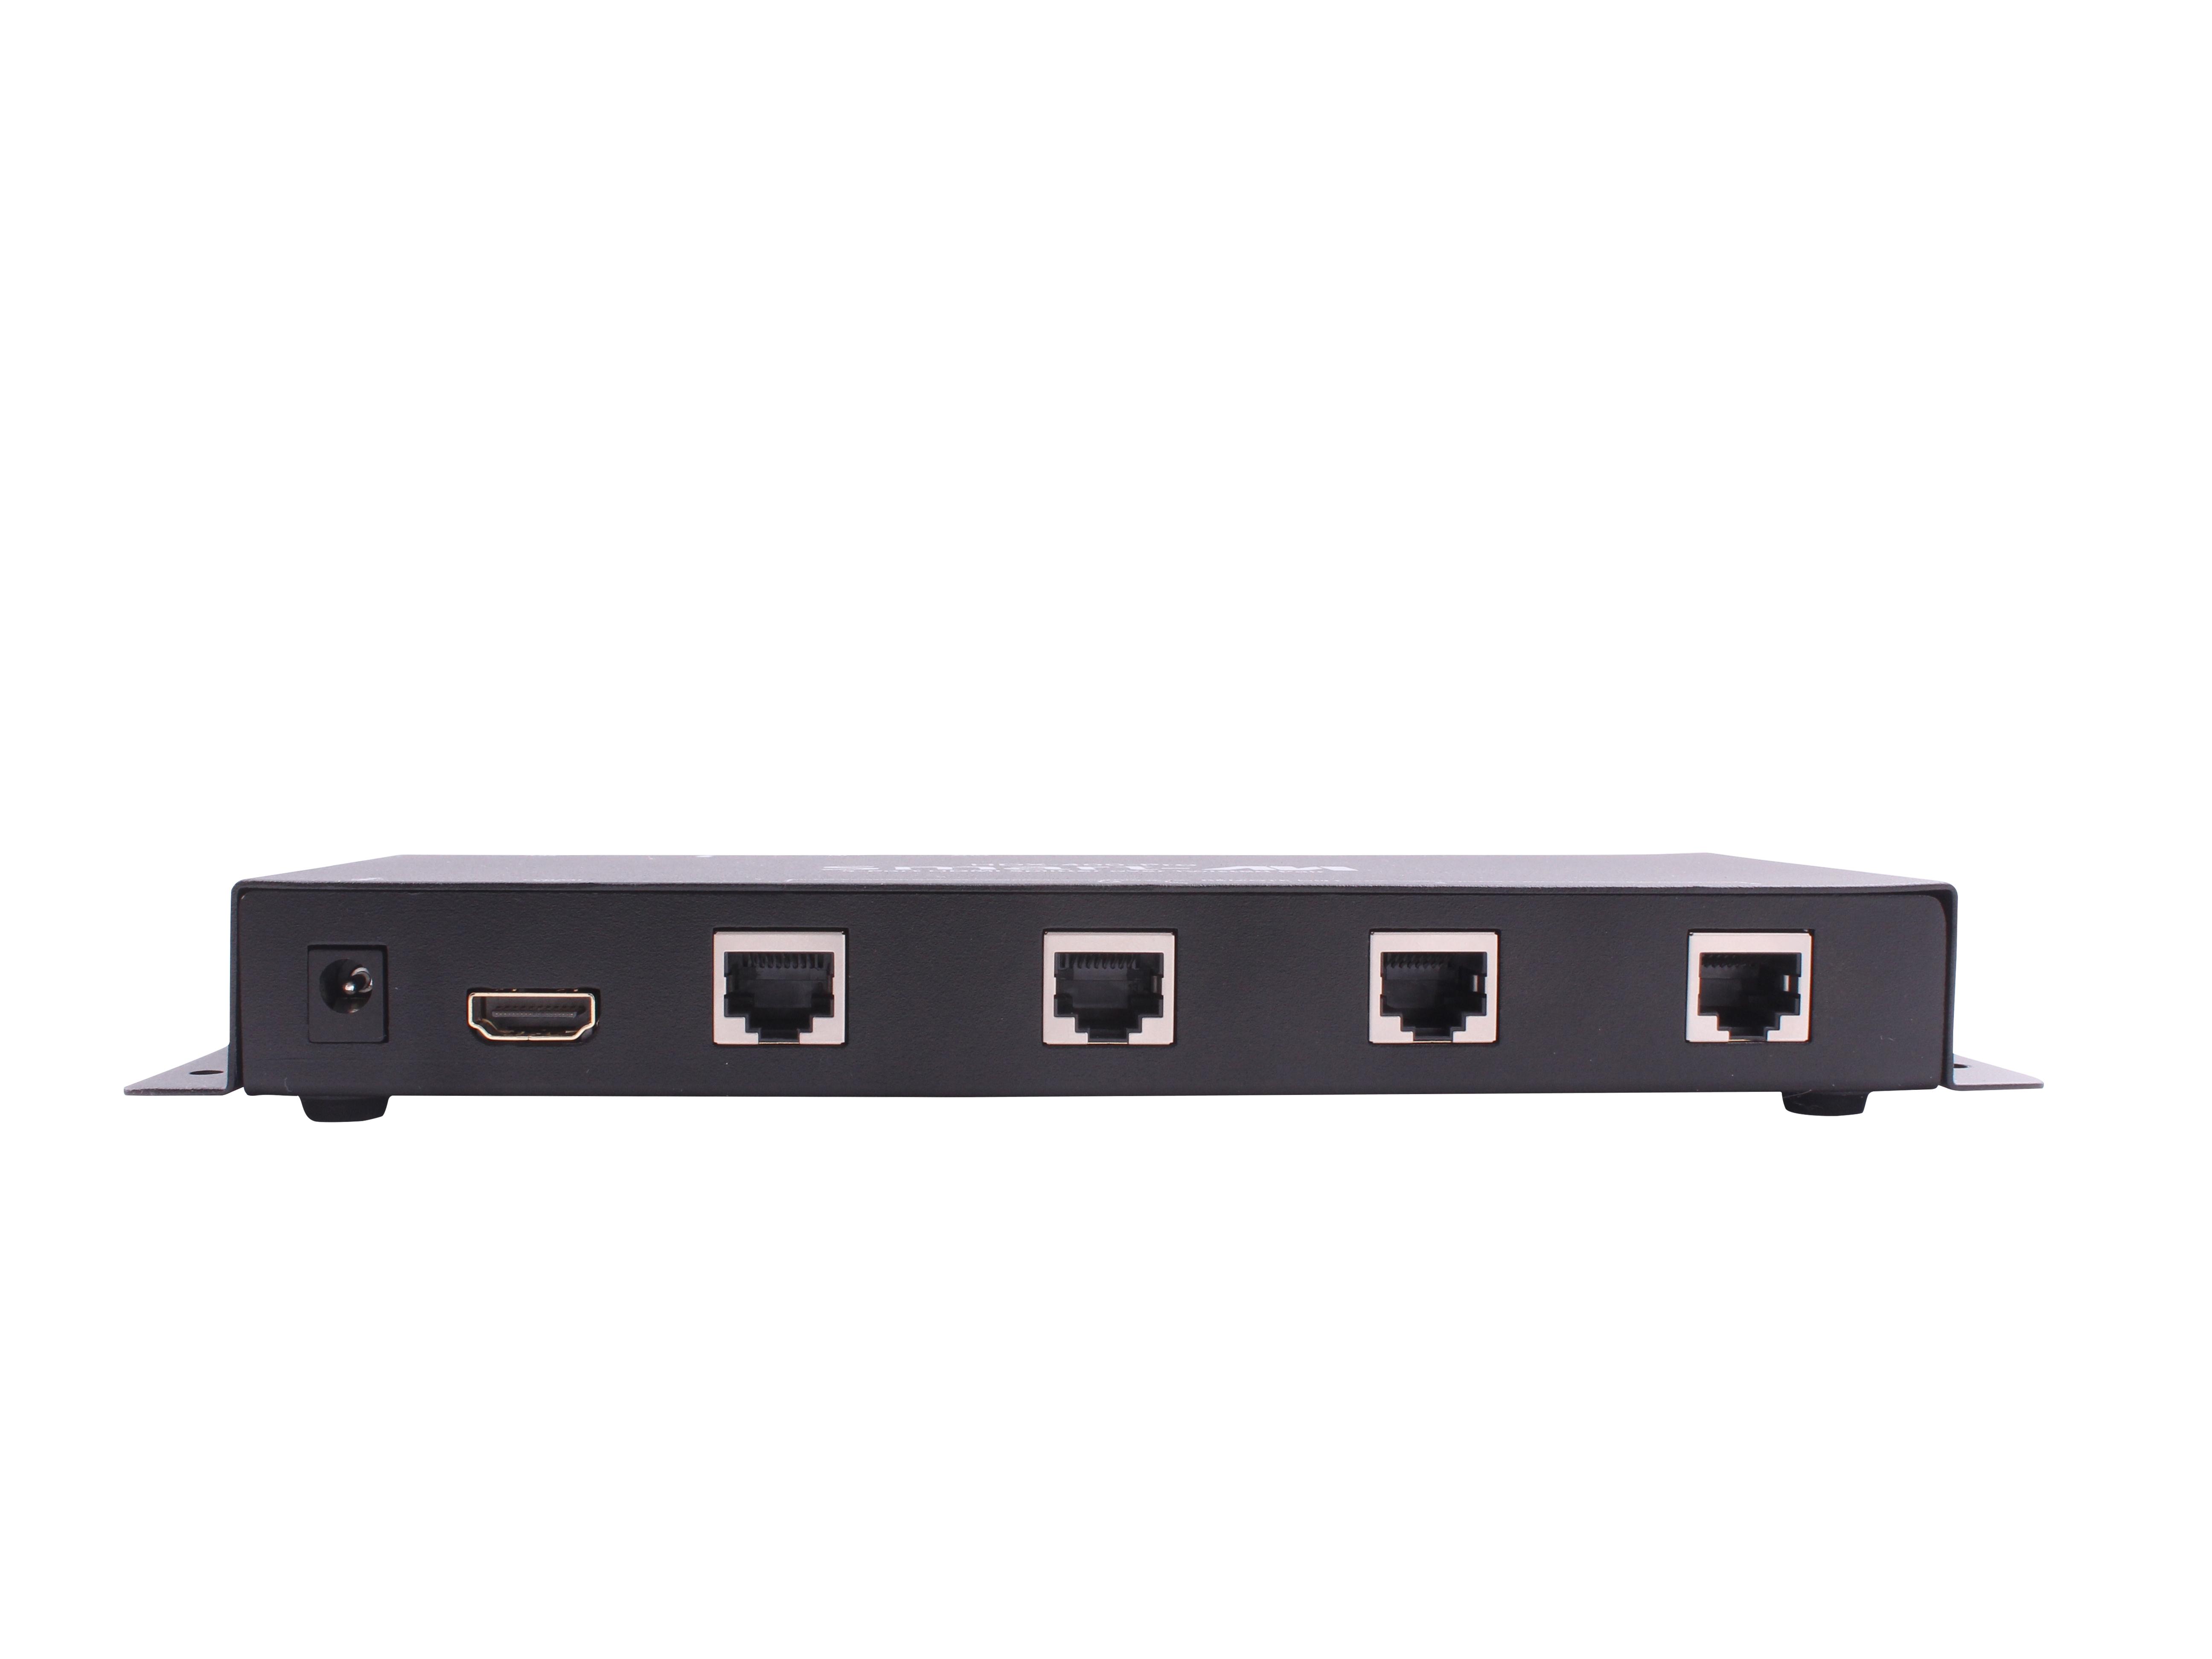 HDX-400-PROS HDMI 4-Port Splitter/Extender (Transmitter) over Cat6 STP cable by Smartavi